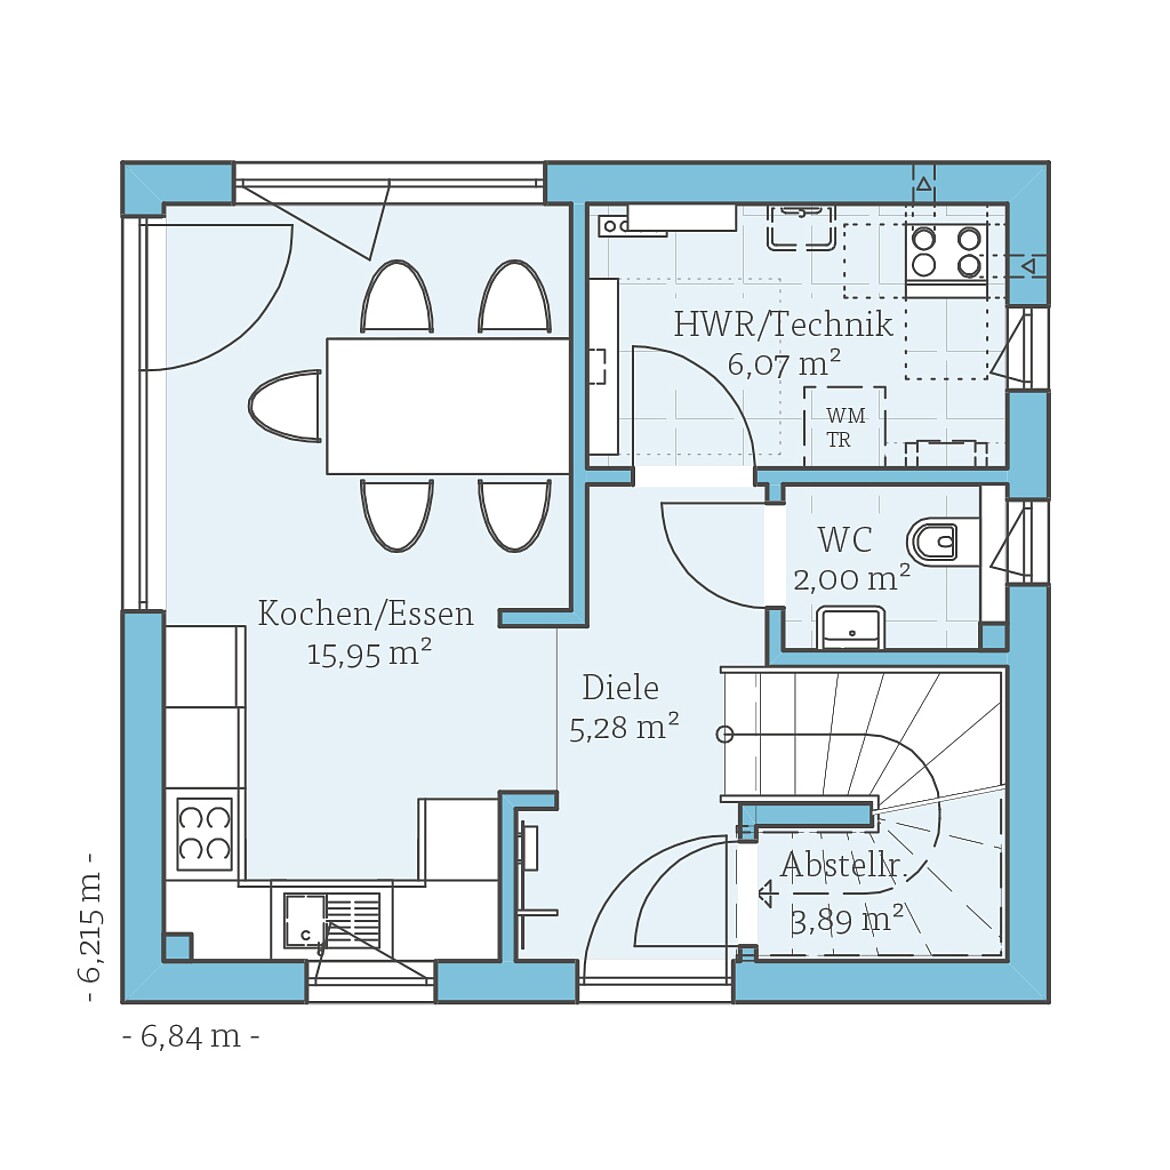 Prefabricated house Tiny House 67: Top floor layout